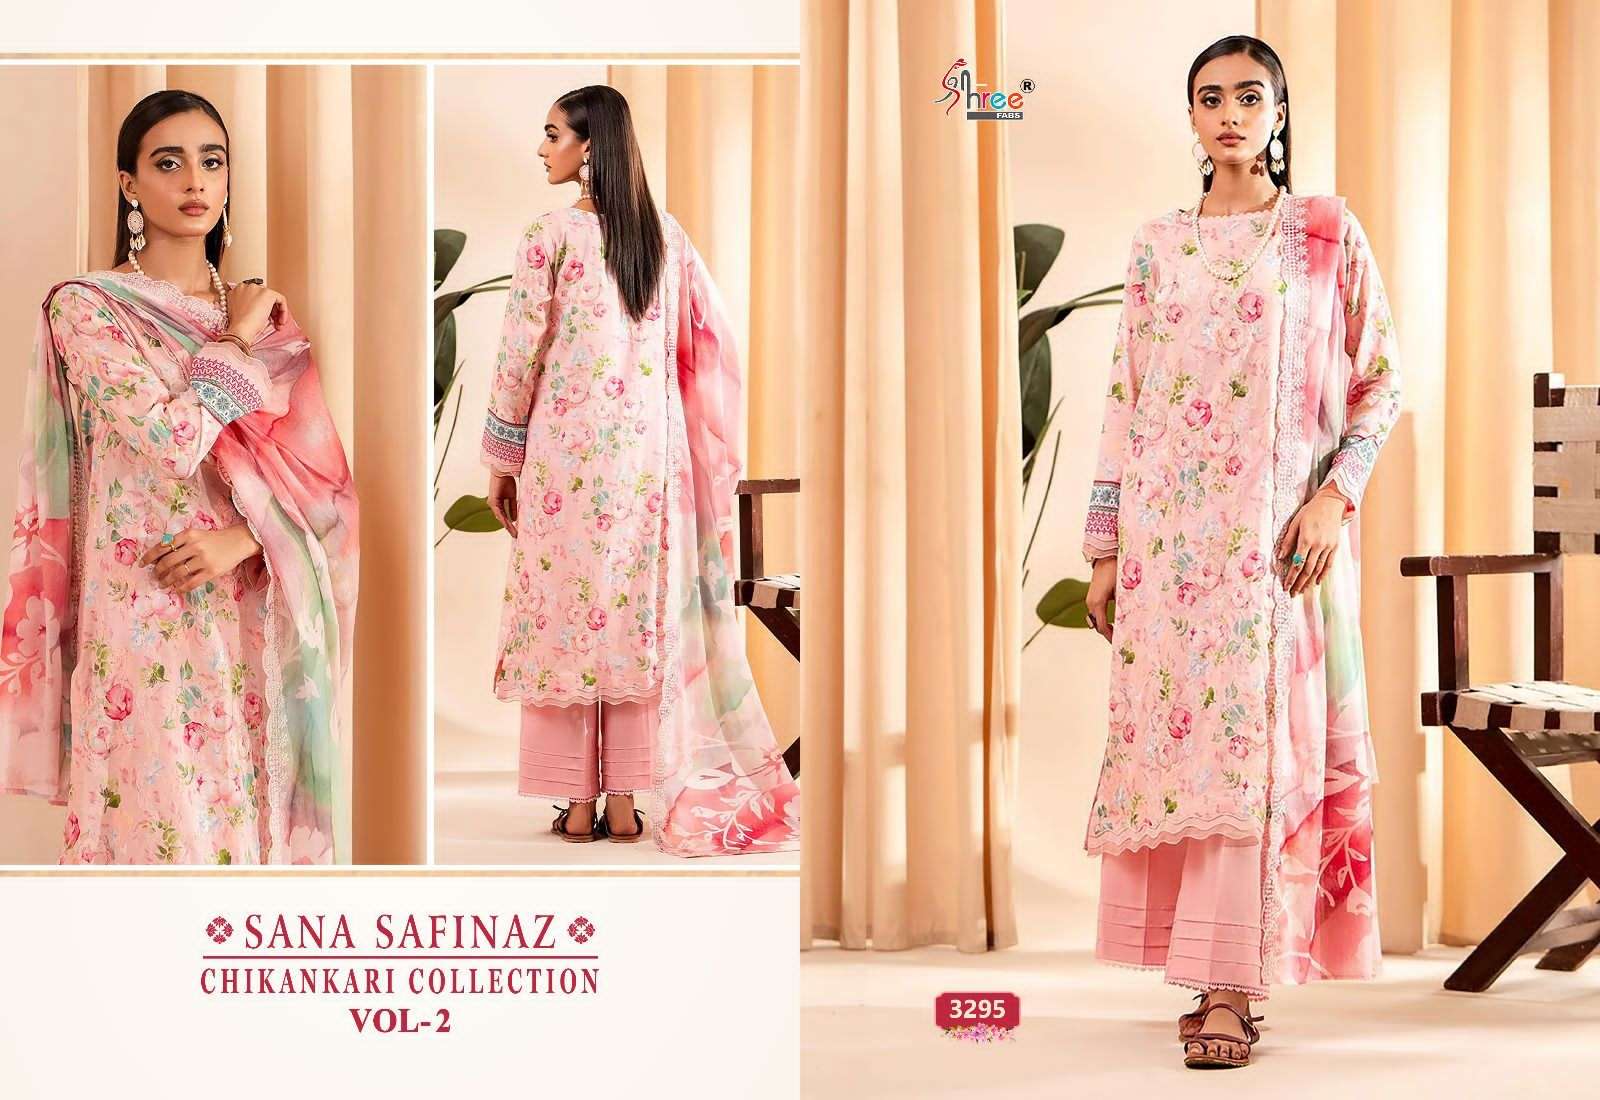 shree fabs sana safinaz chikankari collection vol-2 3292-3297 series designer wedding wear pakistani suit with cotton dupatta at wholesaler rate surat gujarat